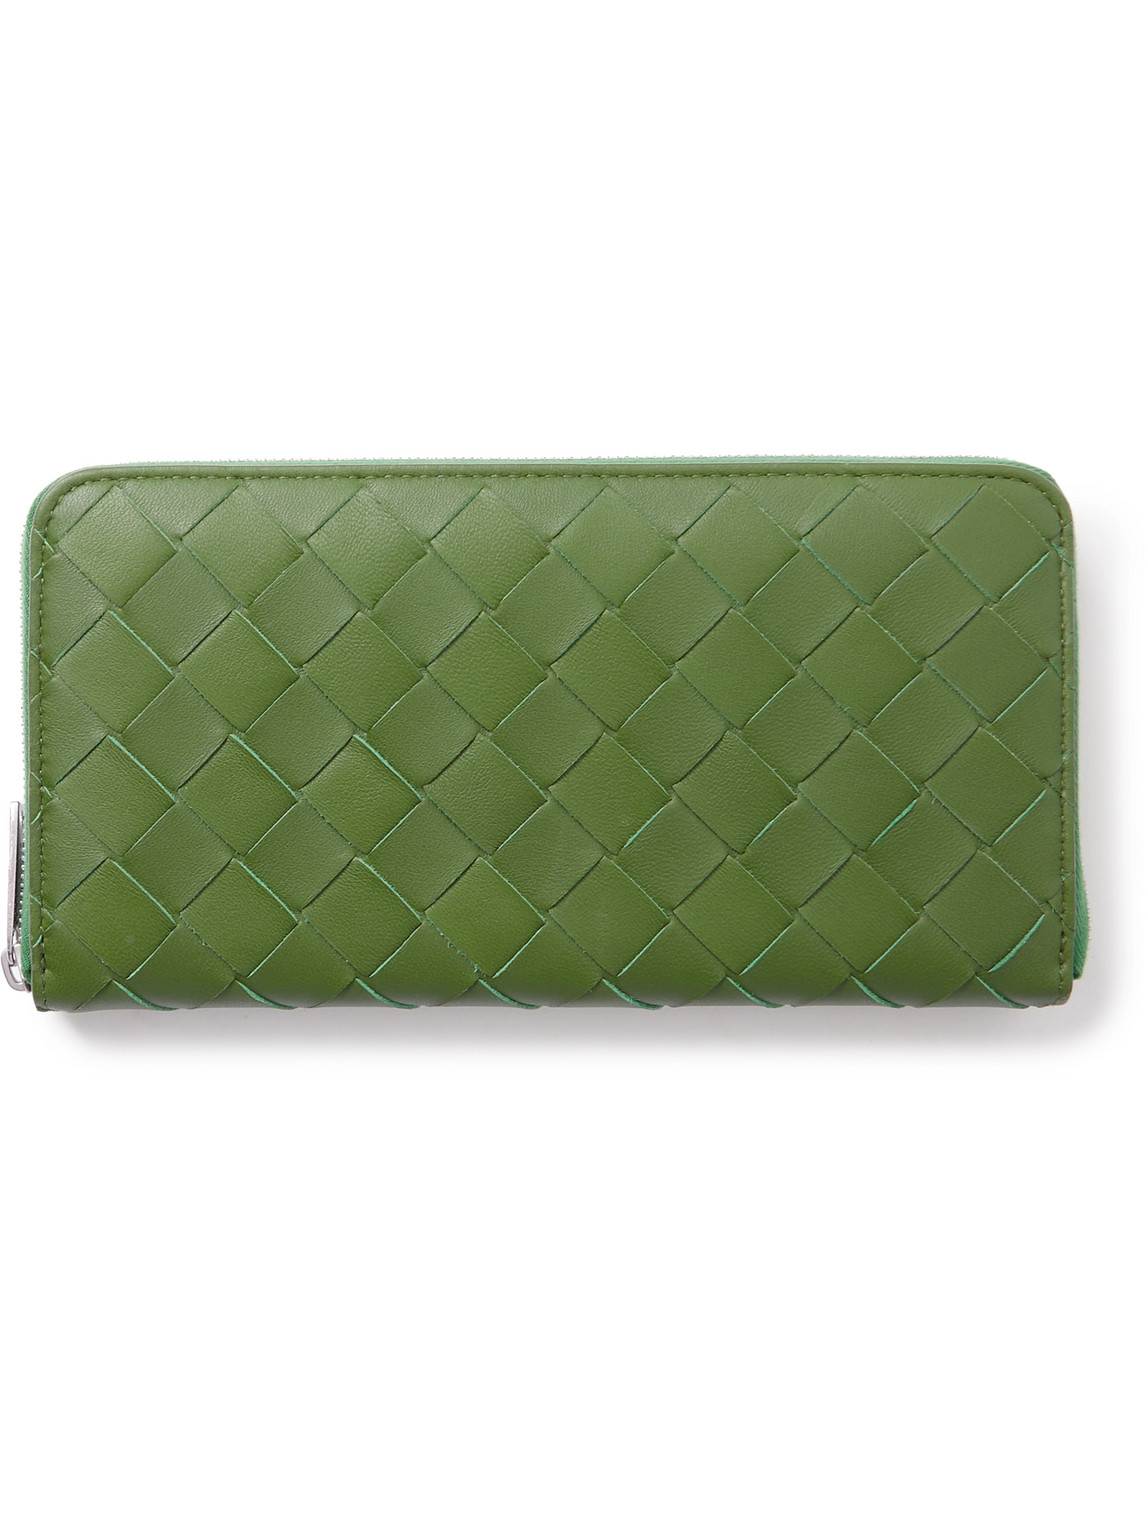 Bottega Veneta Intrecciato Leather Zip-around Wallet In Green